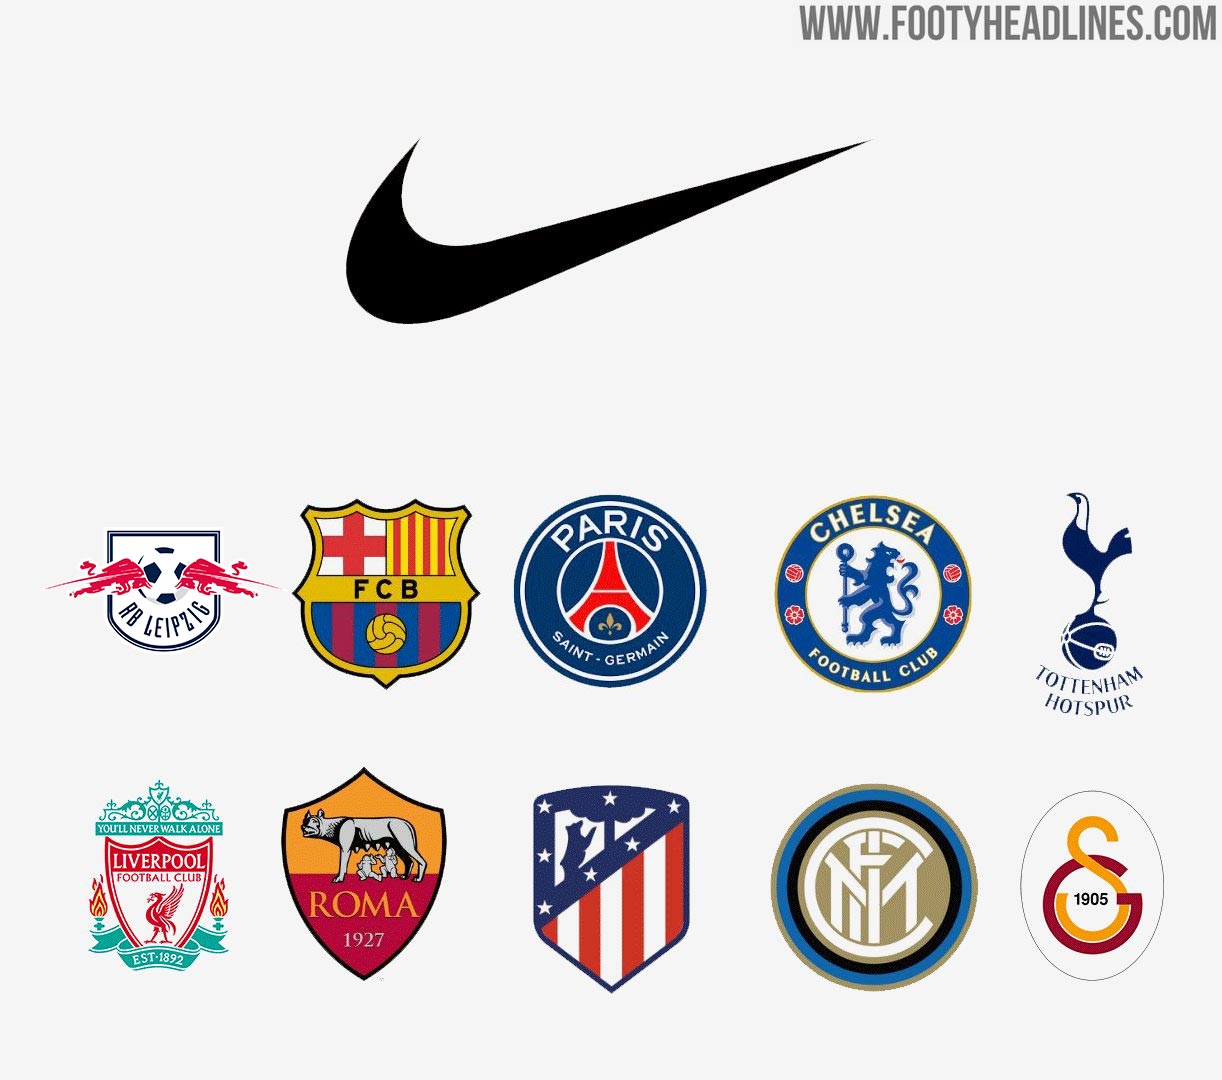 Nike's Pyramid Of Football Kit Sponsorship - Elite, Premium, Standard, Party & Not Affiliated - Footy Headlines